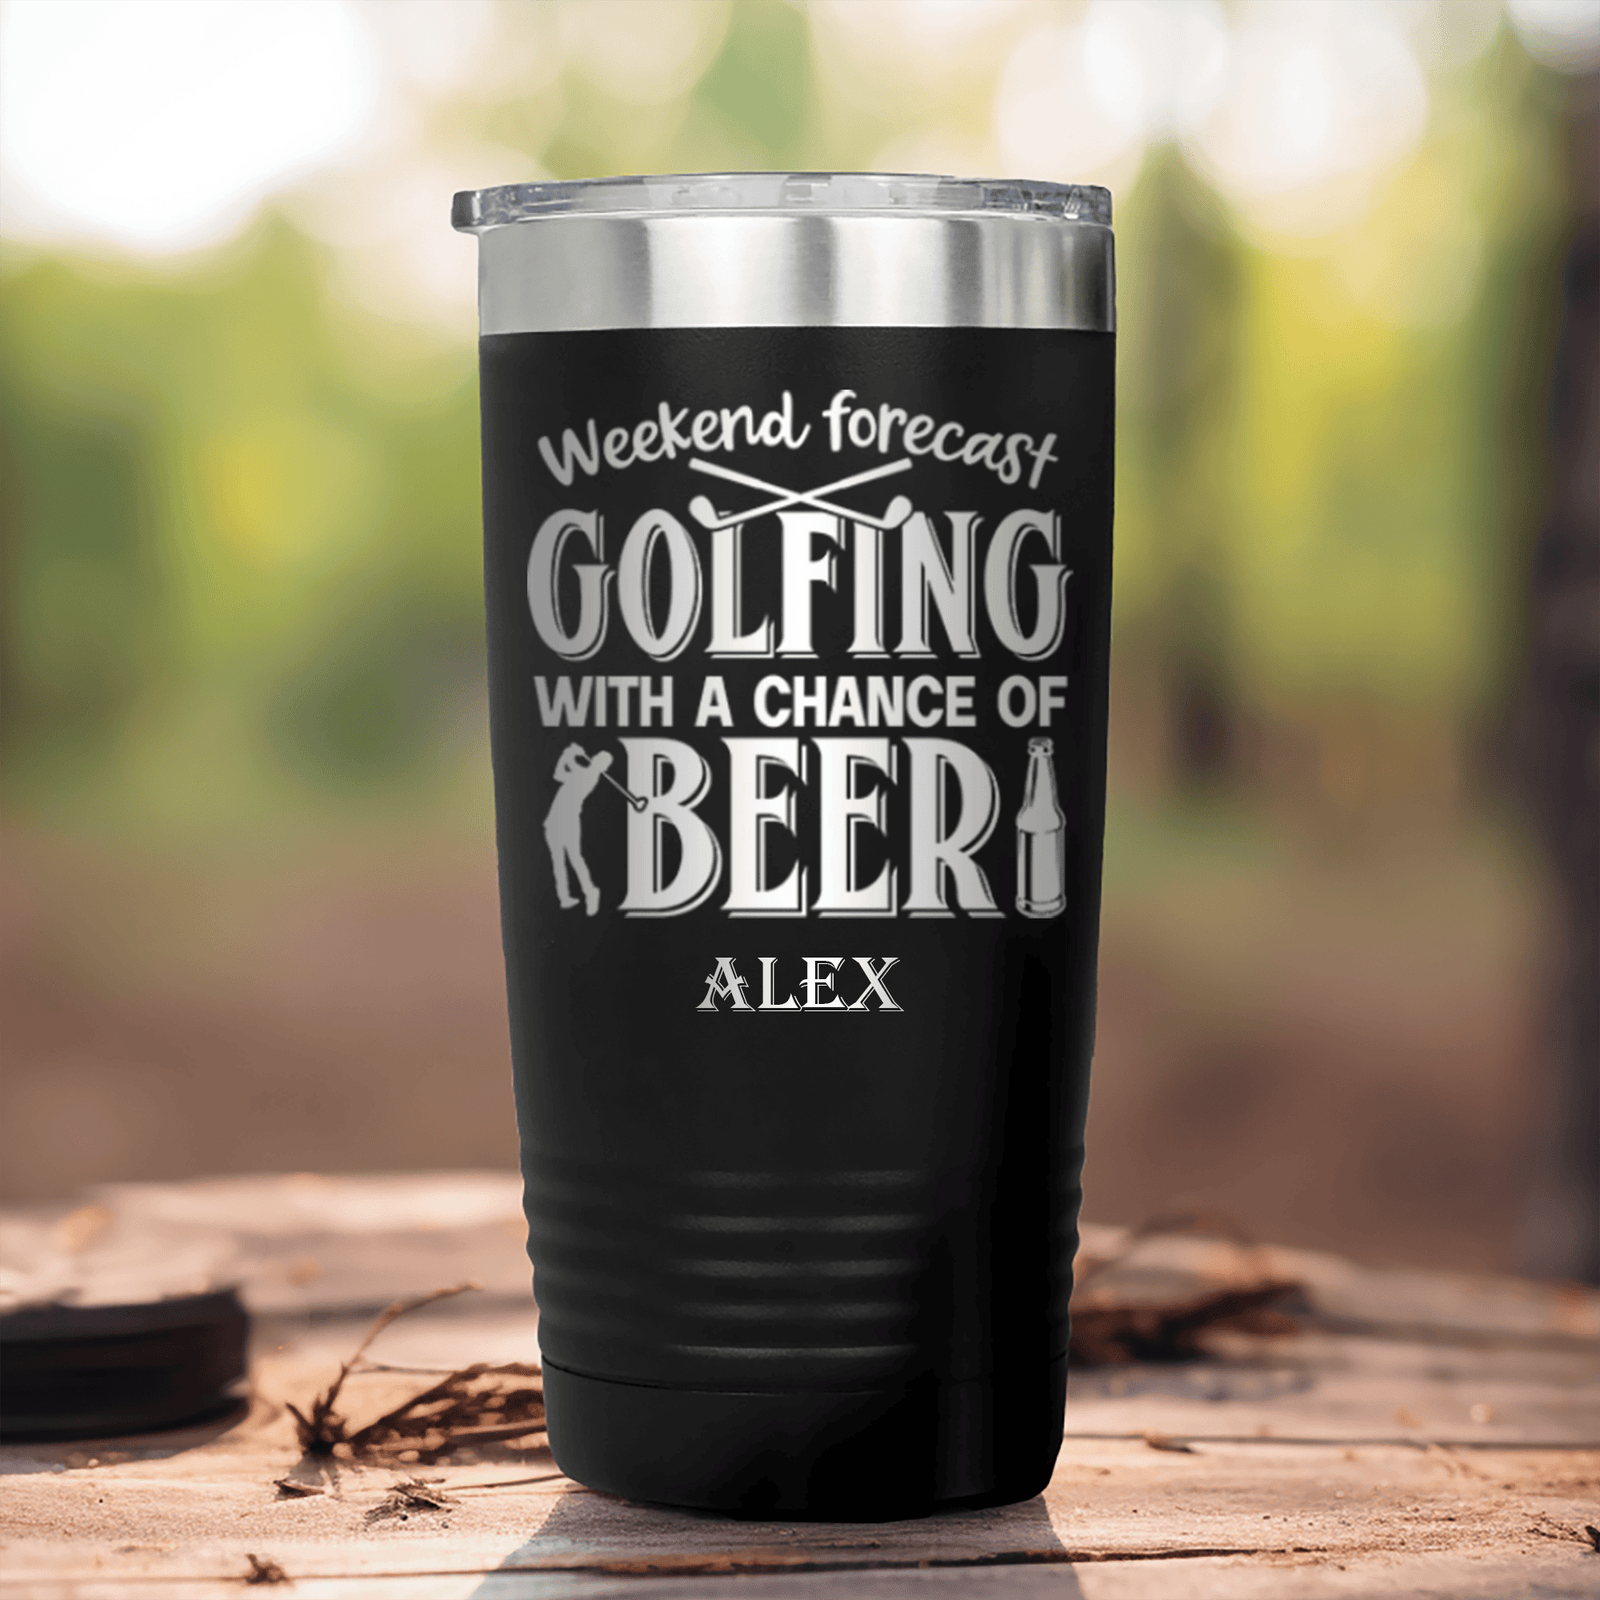 Black Golf Tumbler With Weekend Forecast Golfing Design